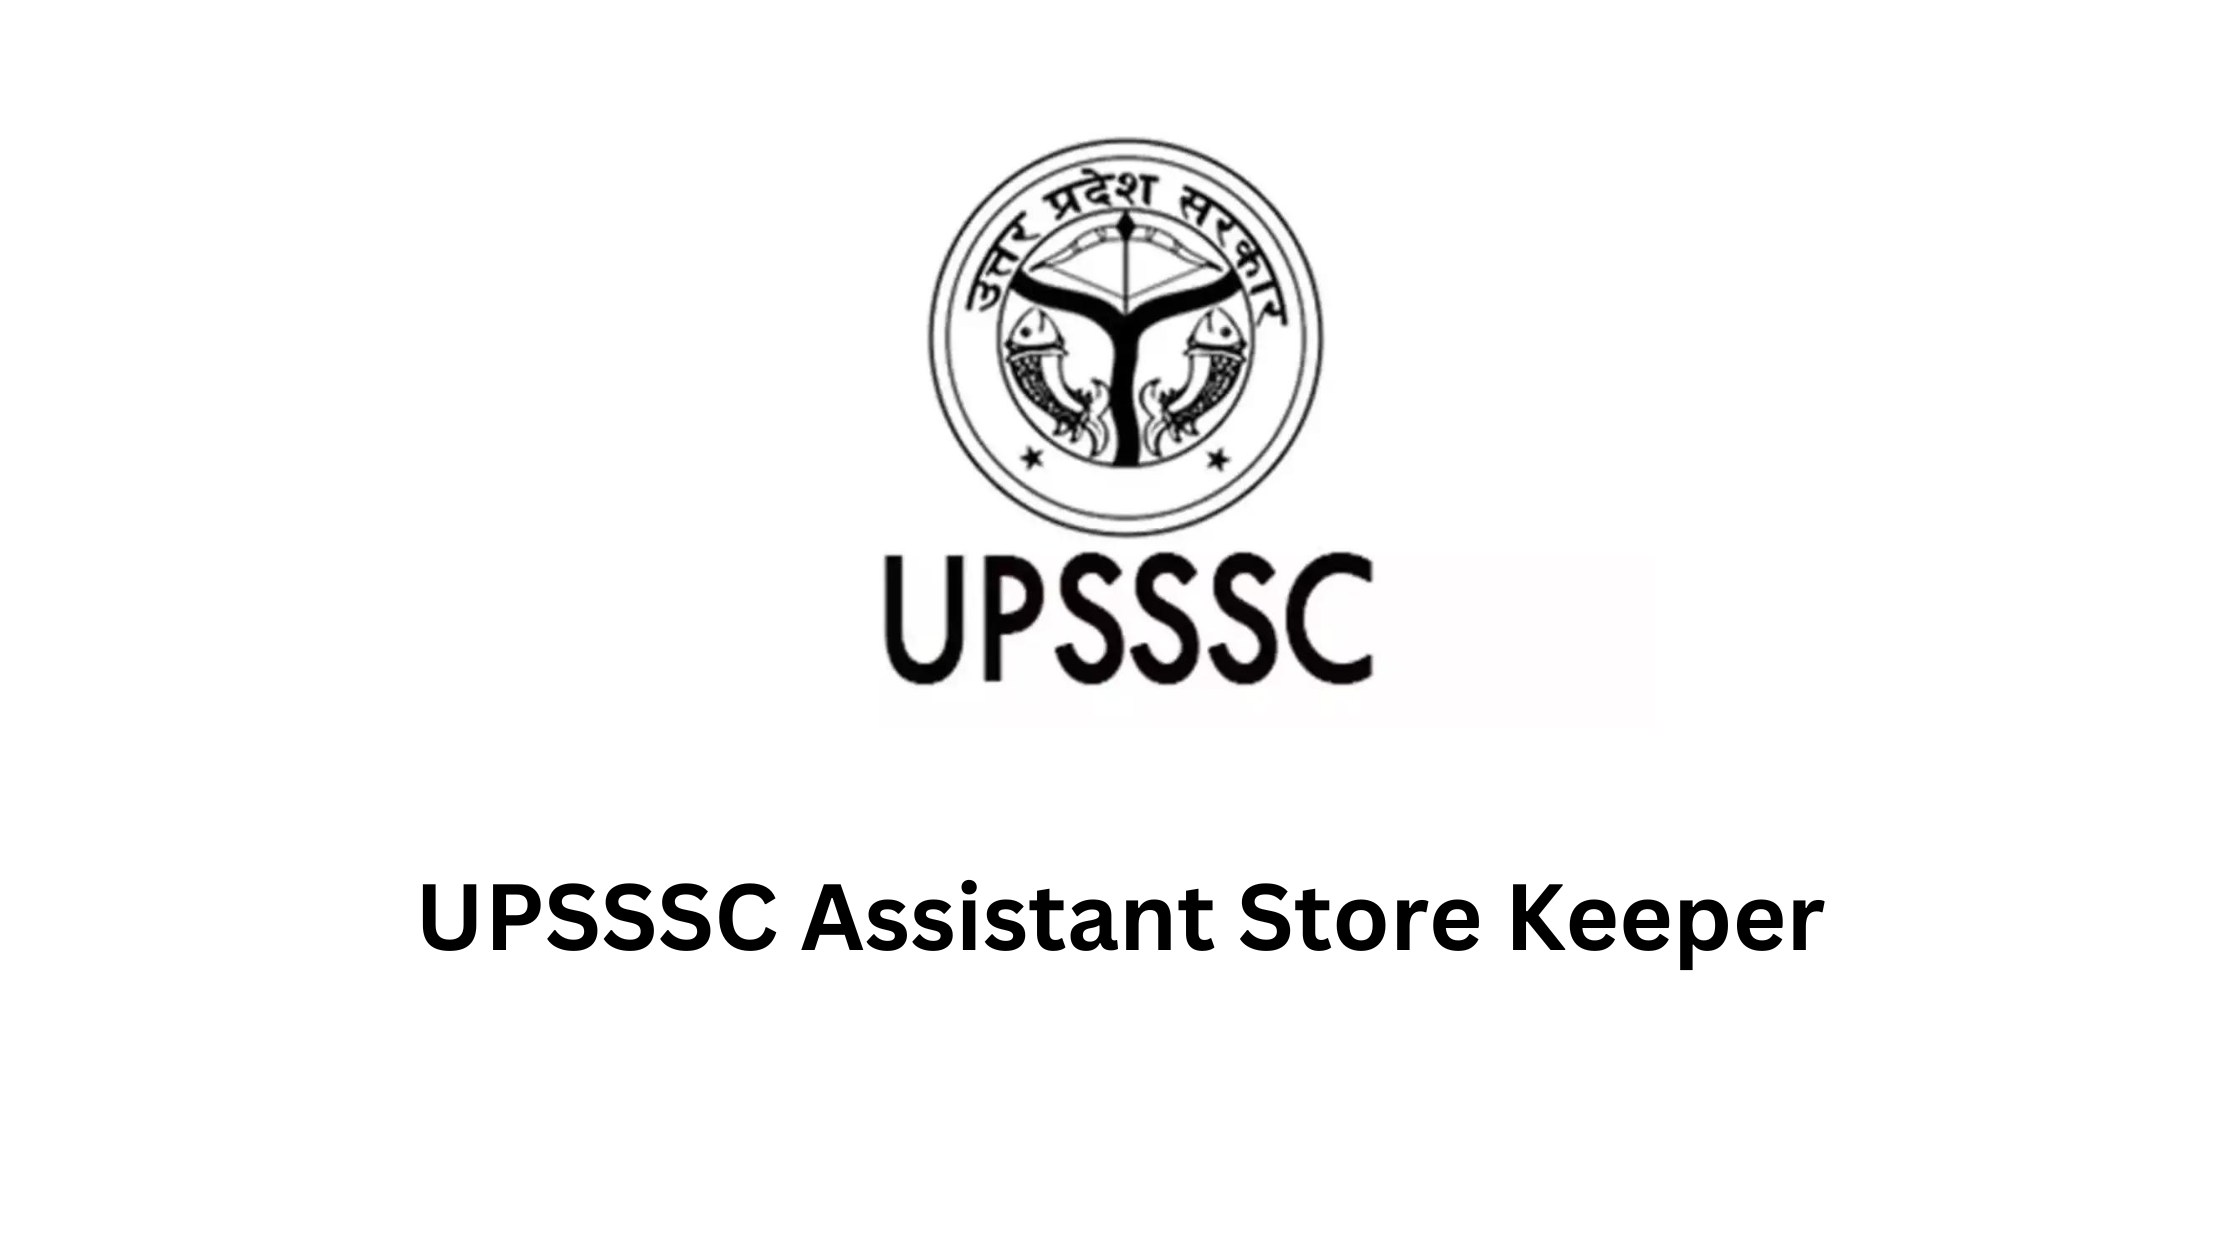 UPSSSC Assistant Store Keeper